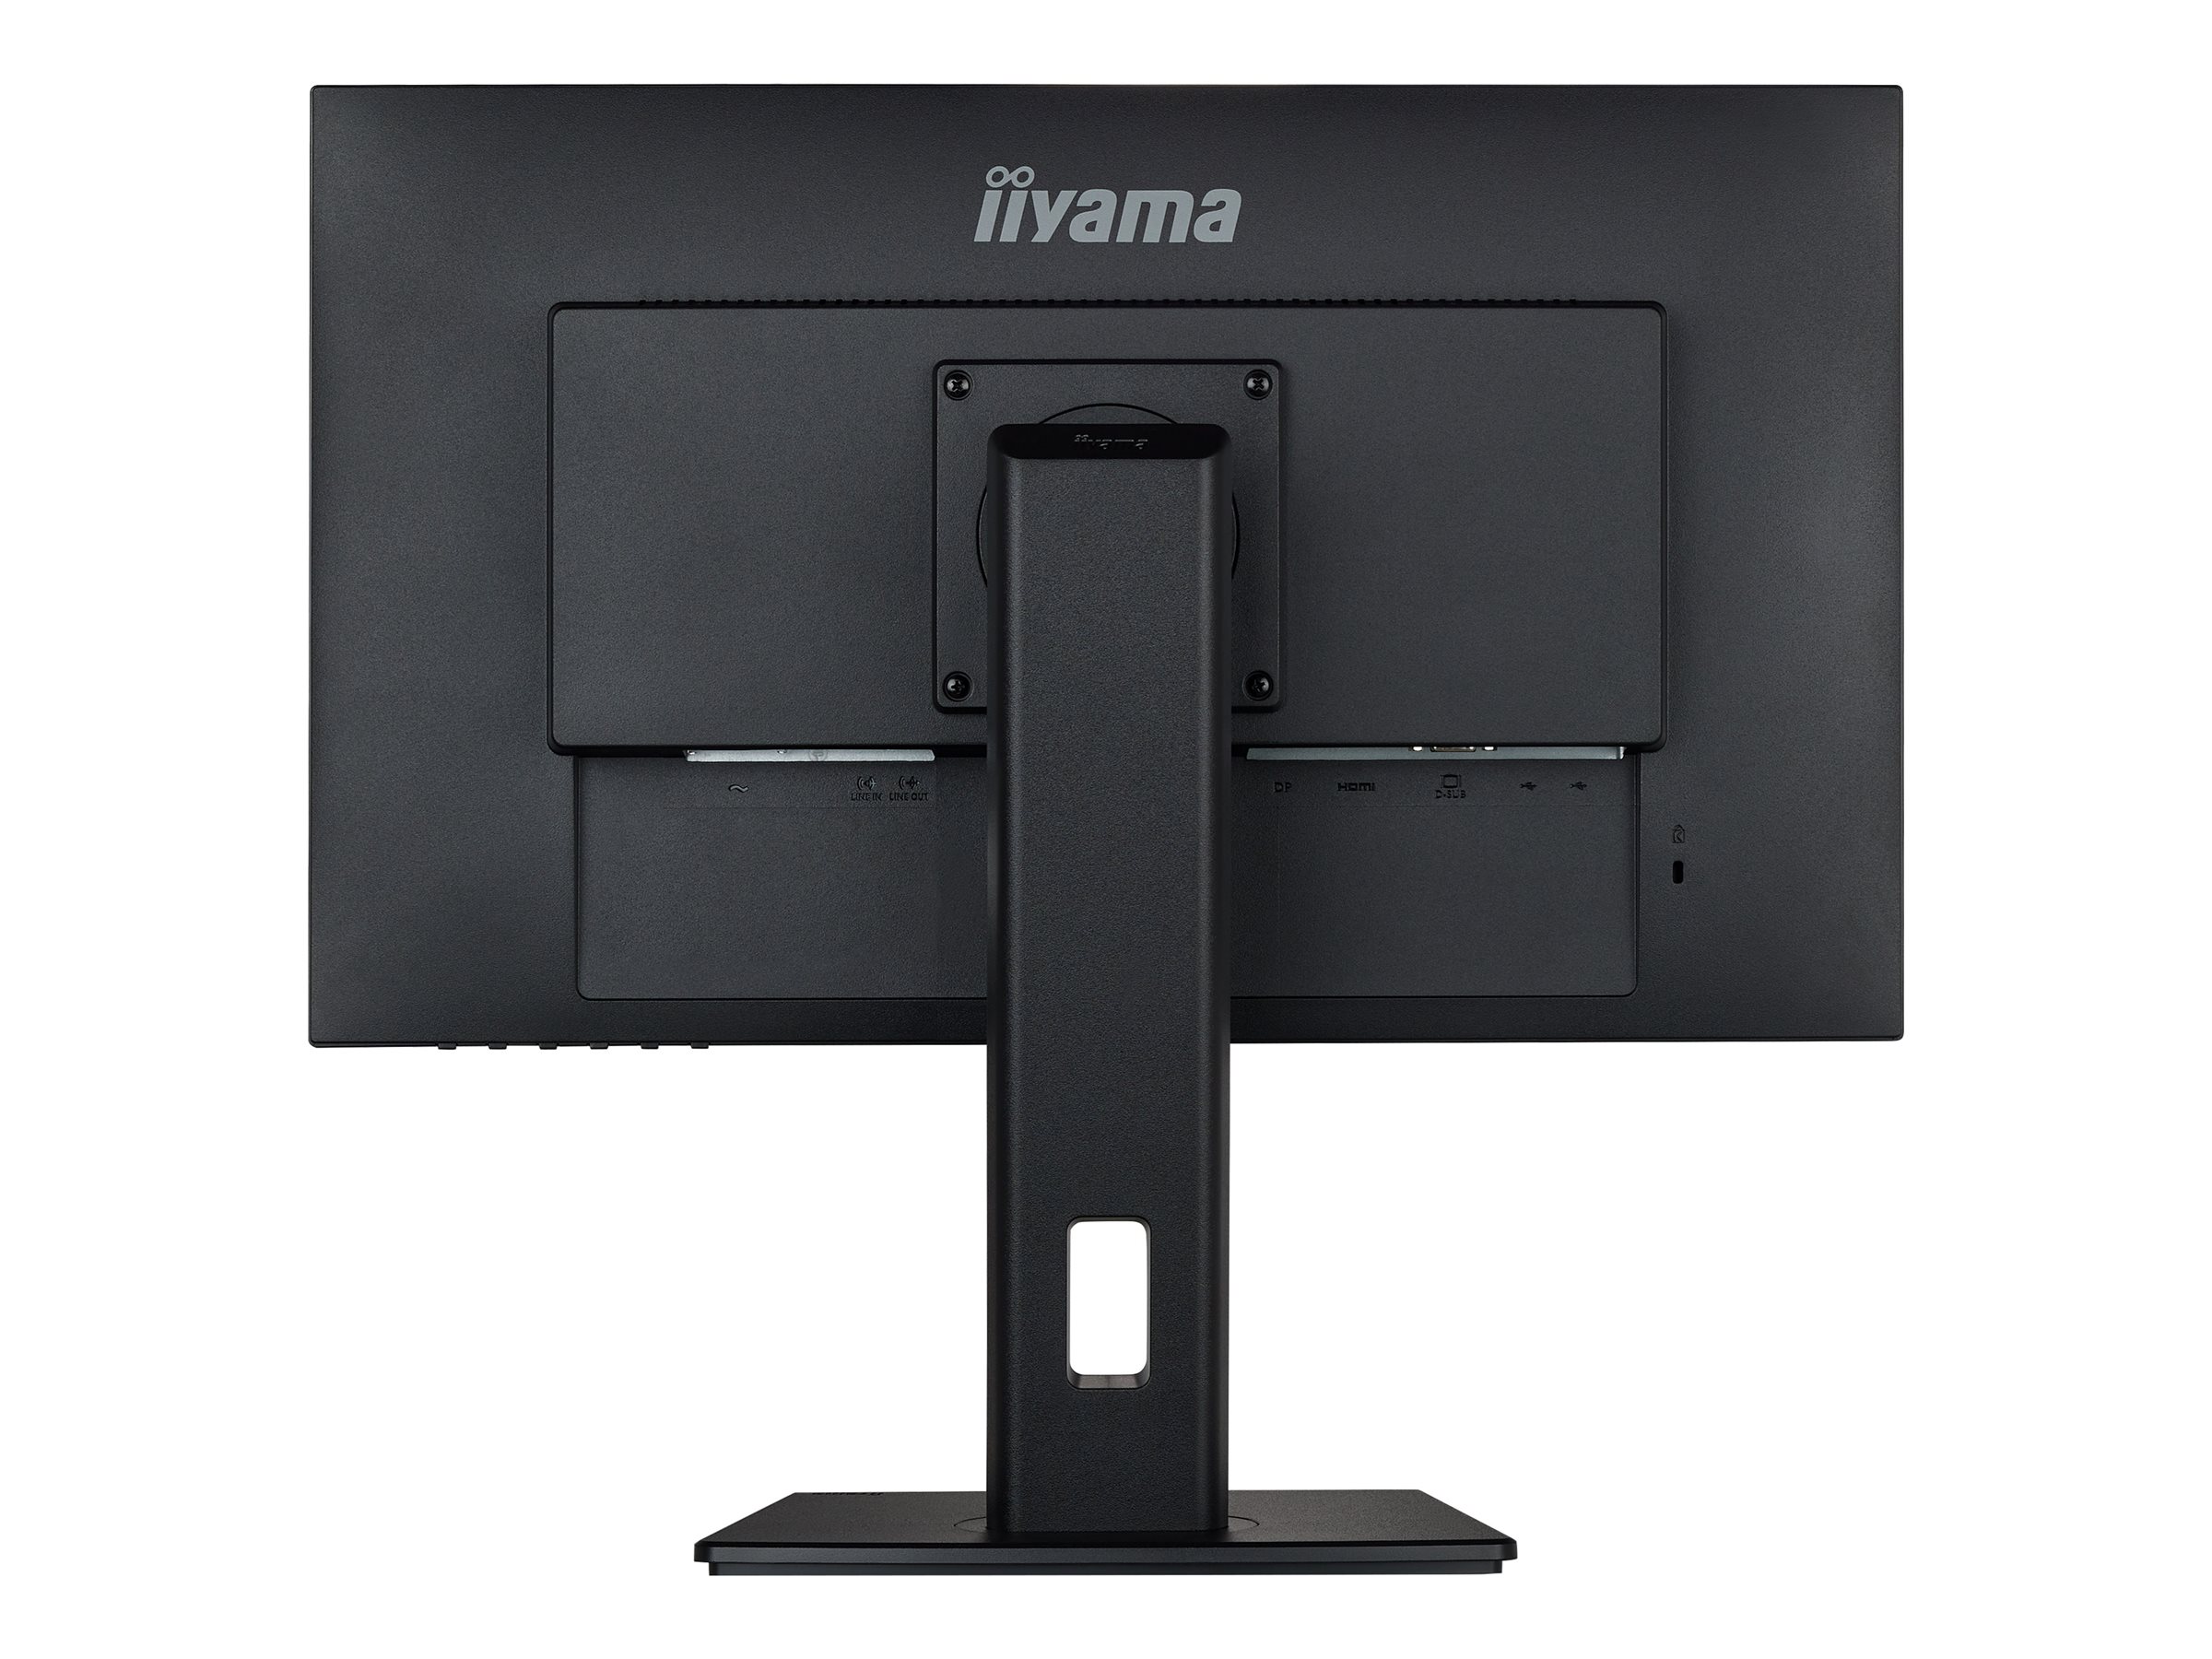 iiyama ProLite XUB2492HSC-B5 - Écran LED - 24" (23.8" visualisable) - 1920 x 1080 Full HD (1080p) @ 75 Hz - IPS - 250 cd/m² - 1000:1 - 4 ms - HDMI, DisplayPort, USB-C - haut-parleurs - noir mat - XUB2492HSC-B5 - Écrans d'ordinateur